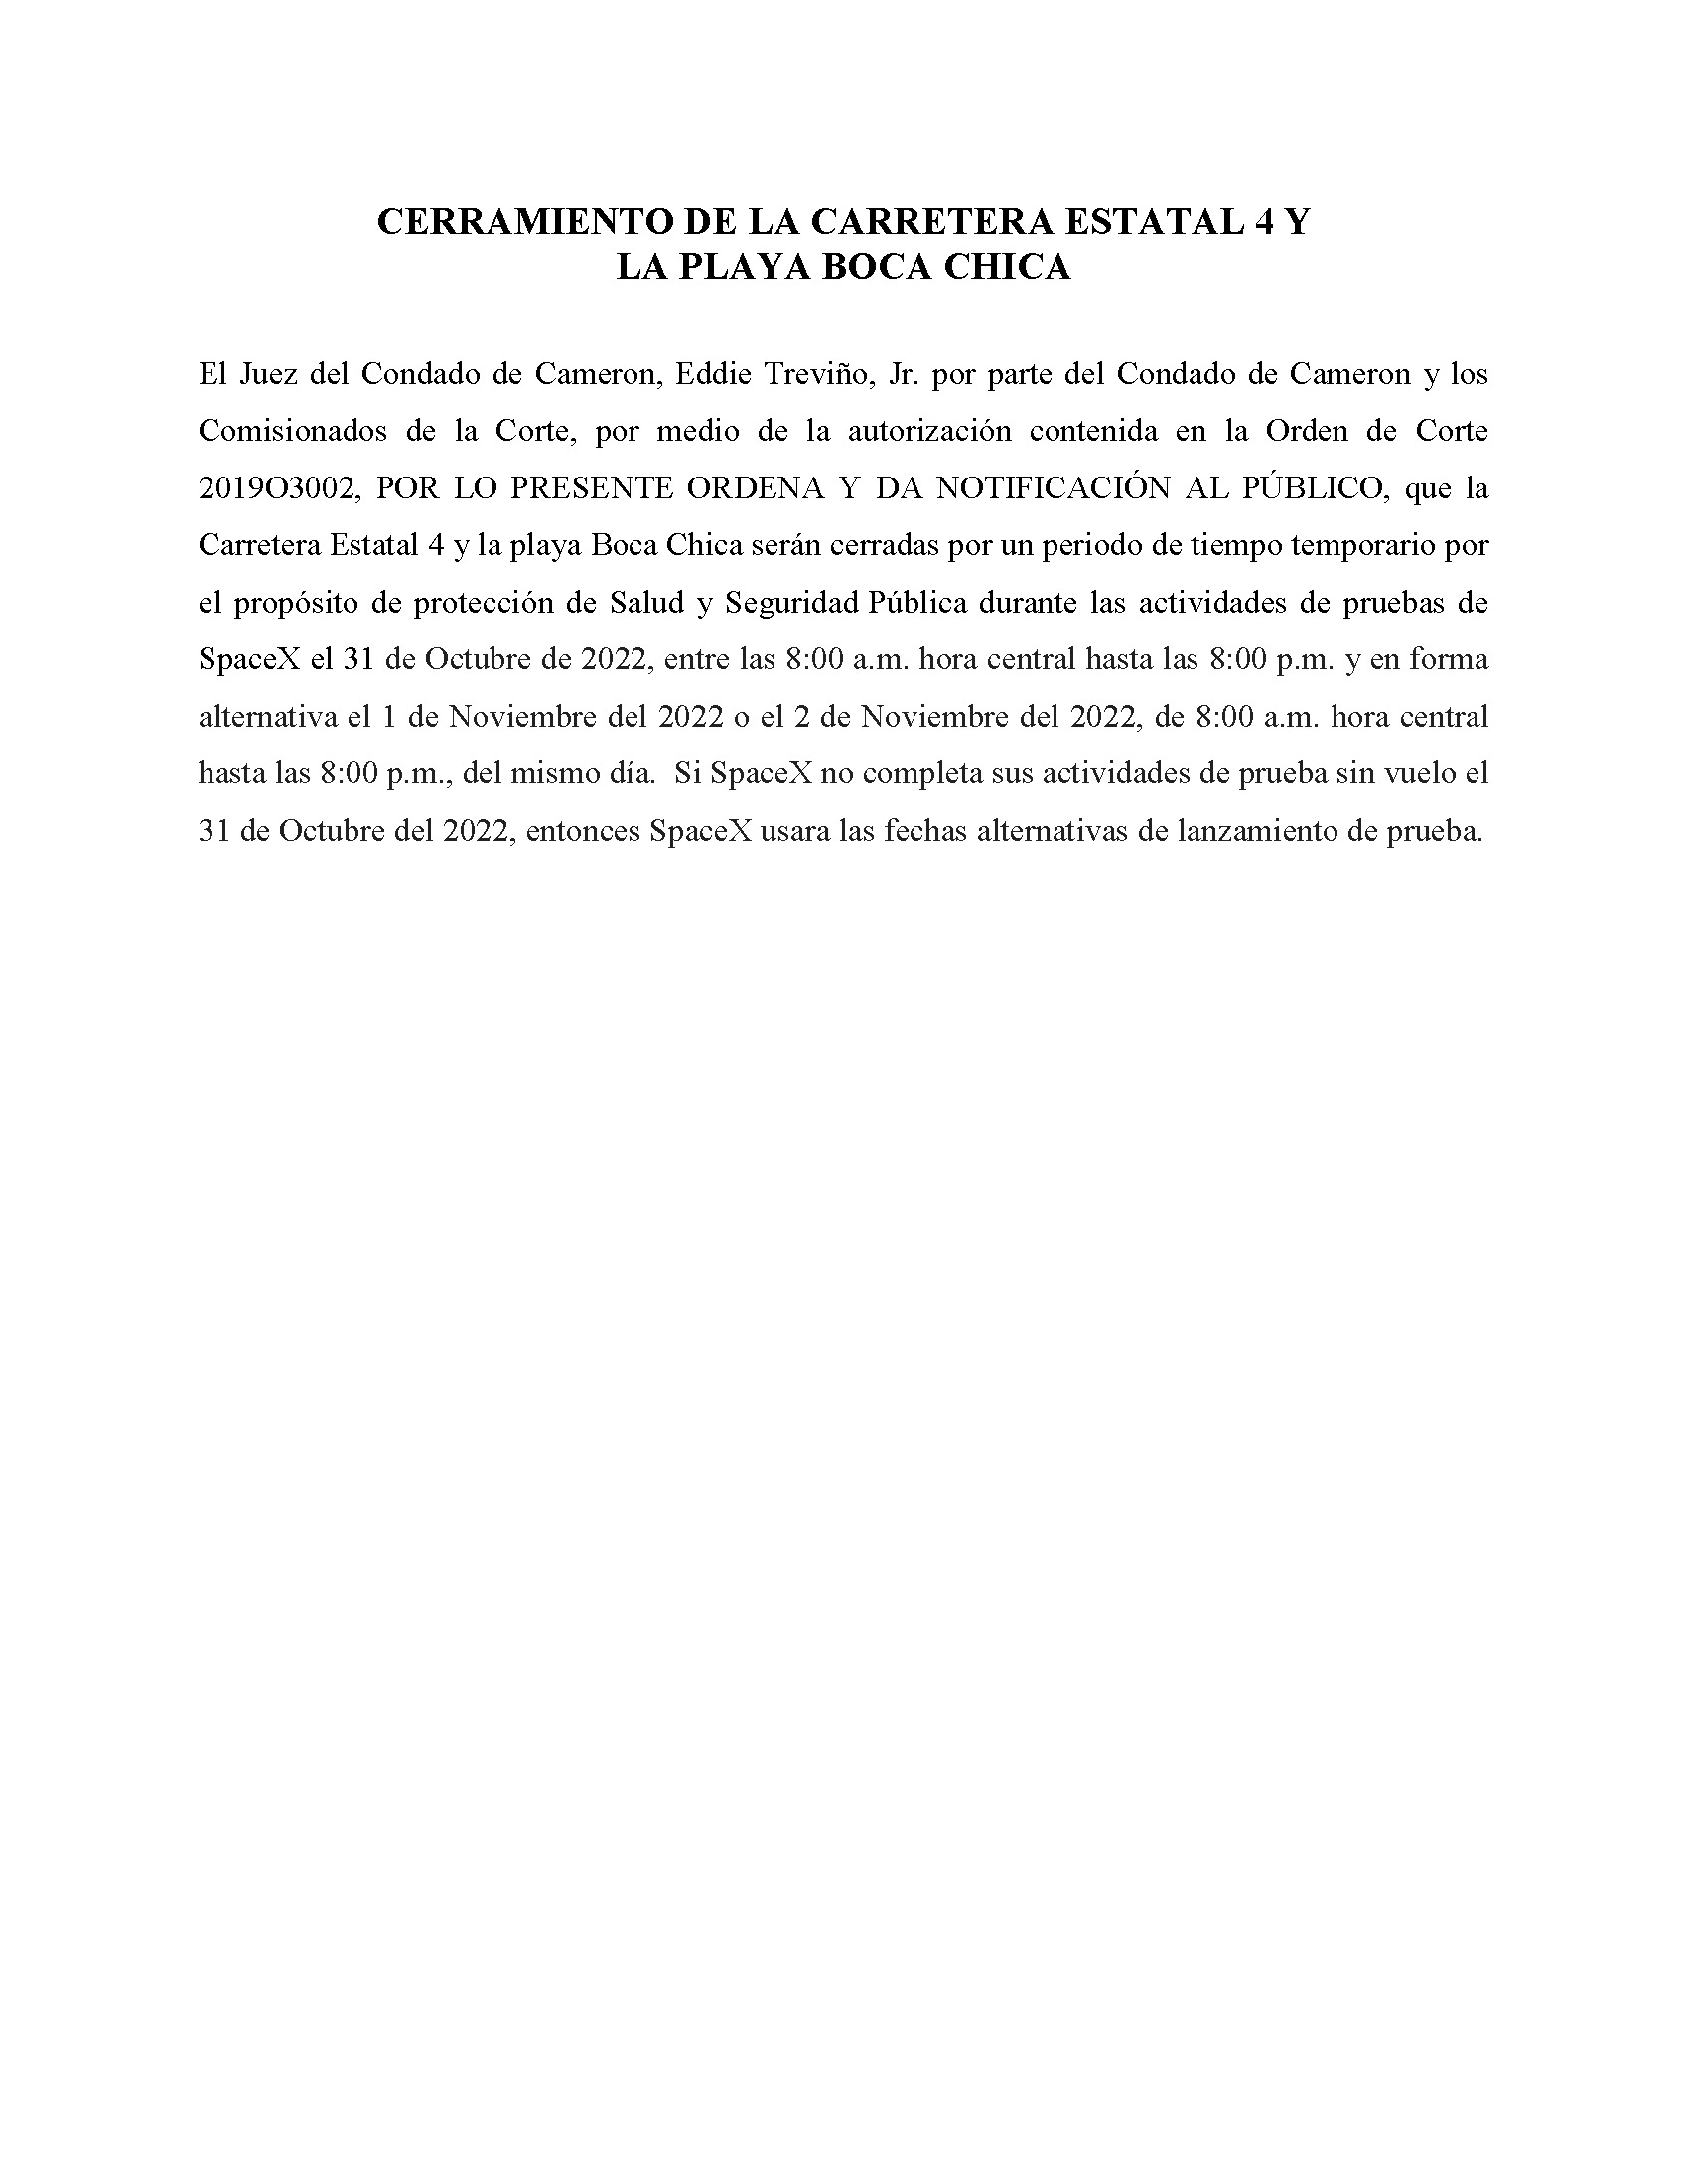 ORDER.CLOSURE OF HIGHWAY 4 Y LA PLAYA BOCA CHICA.SPANISH.10.31.2022